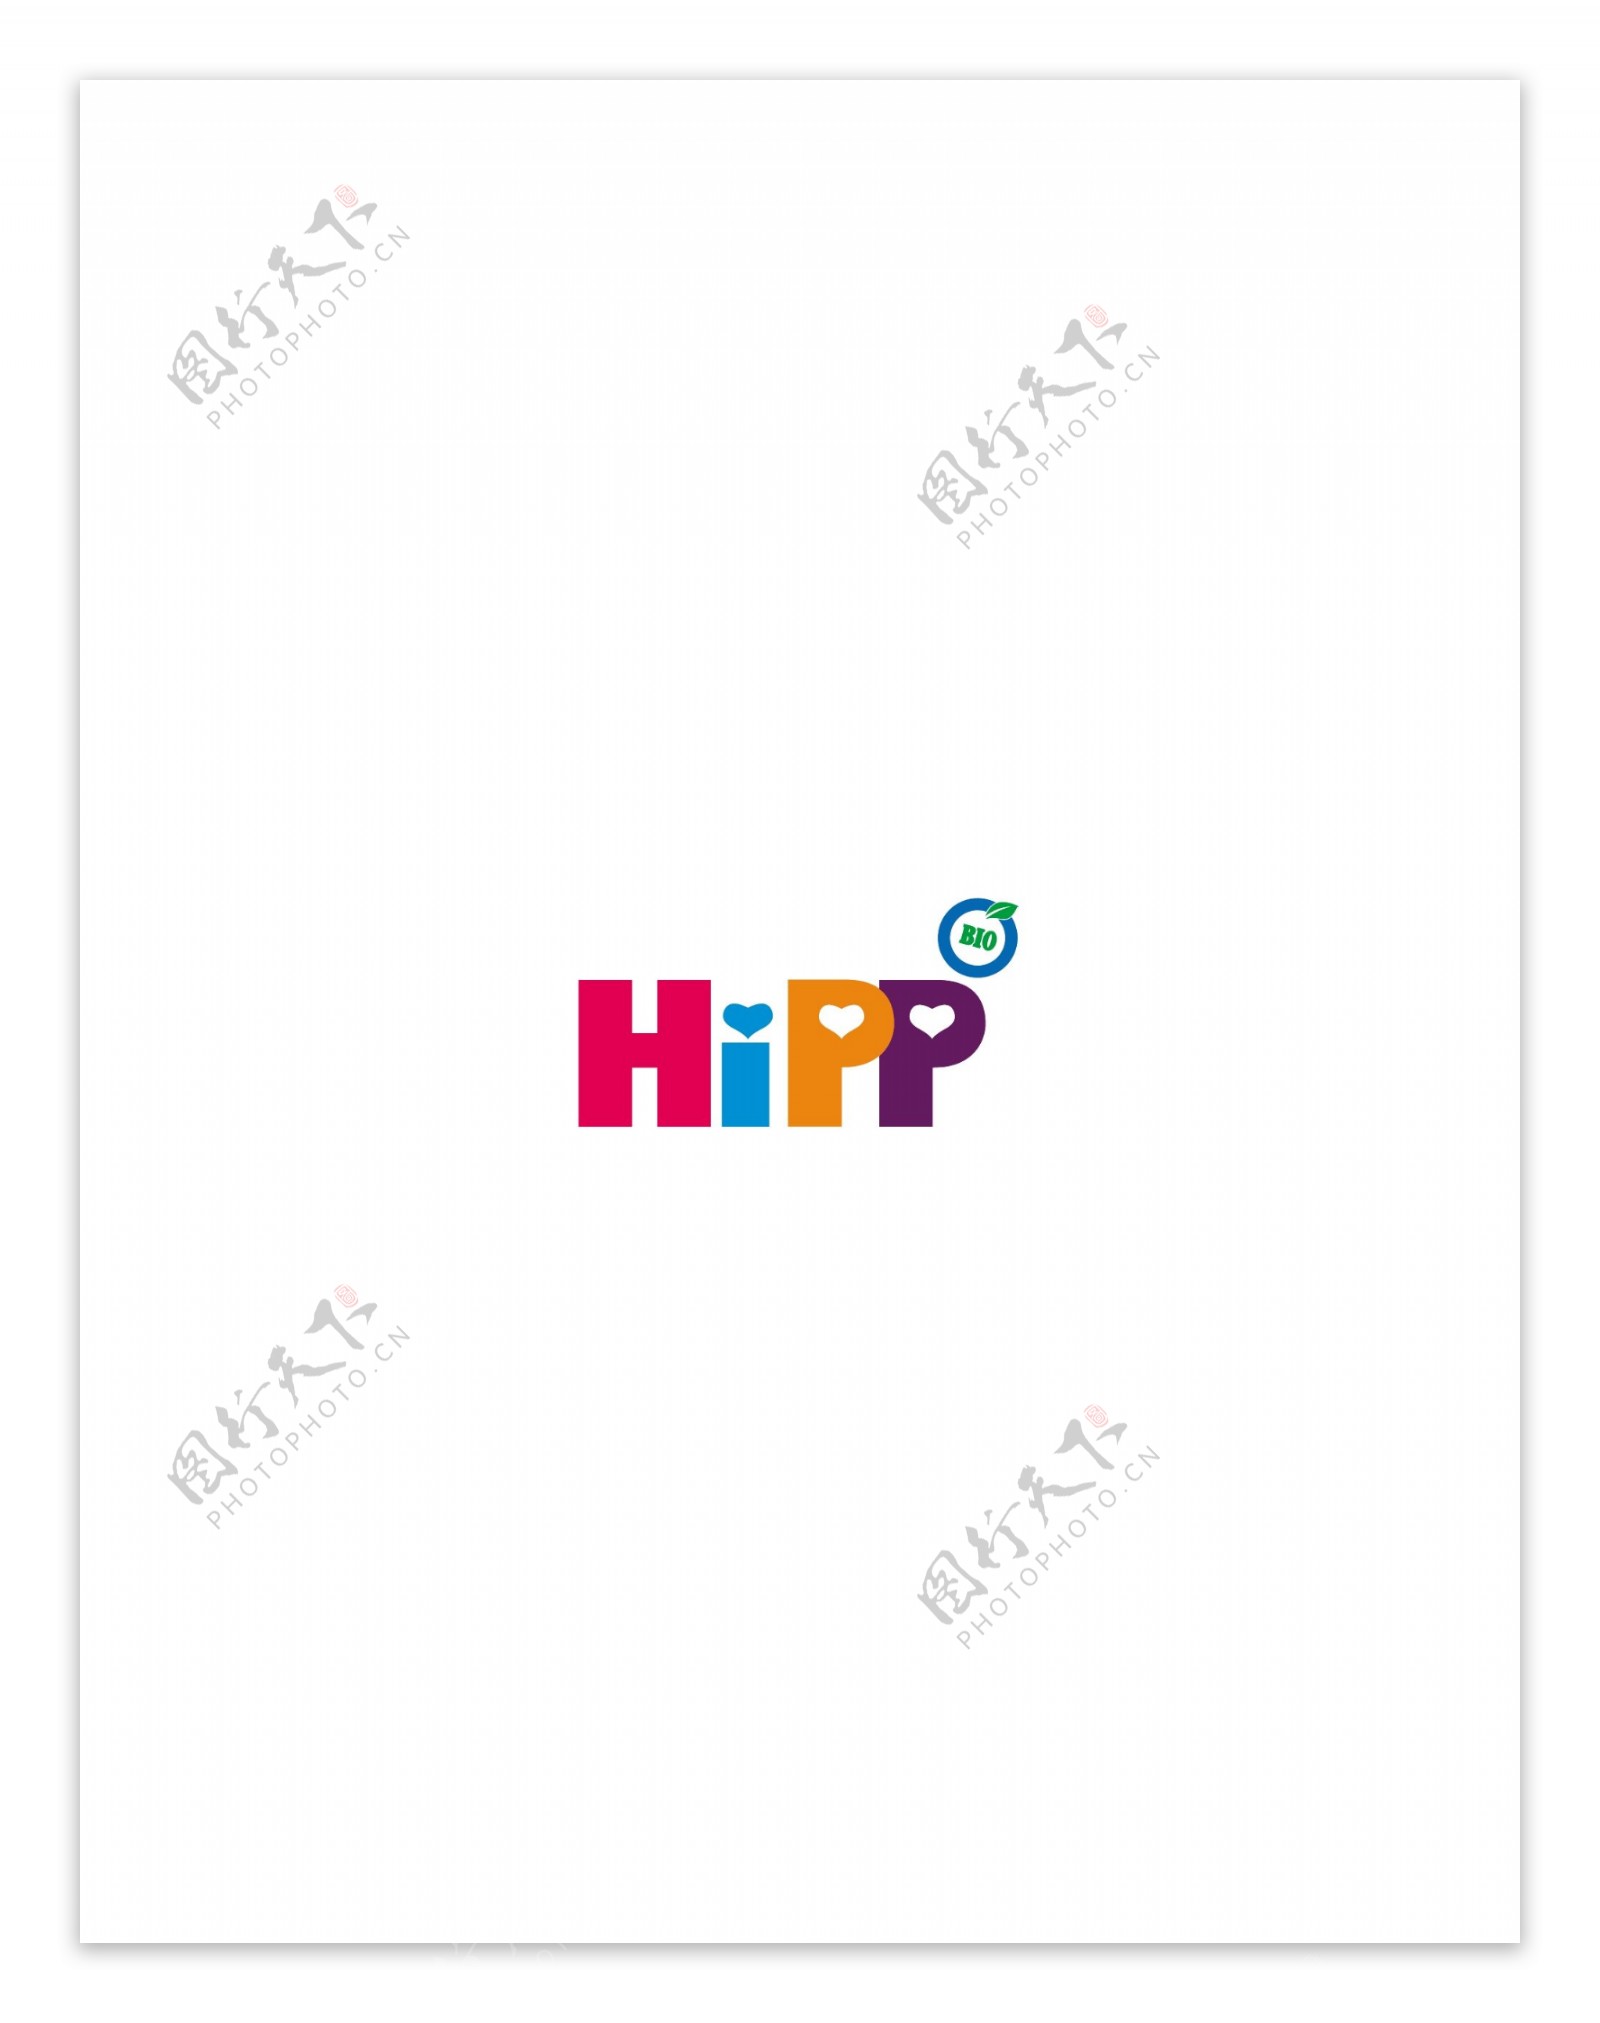 Hipplogo设计欣赏足球和IT公司标志Hipp下载标志设计欣赏